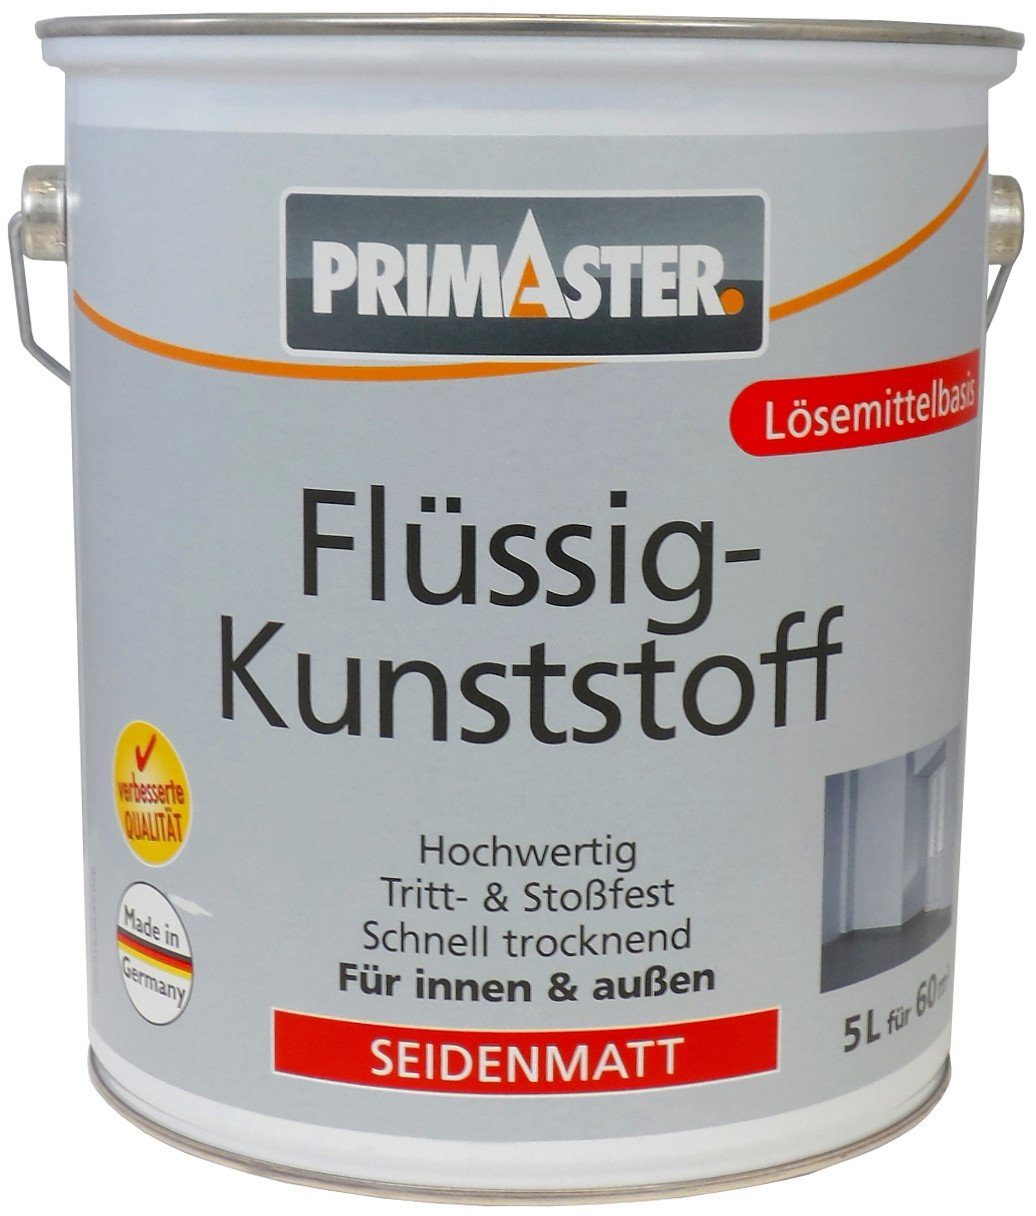 Primaster Acryl-Flüssigkunststoff Primaster Flüssigkunststoff Premium 5 8012 L RAL